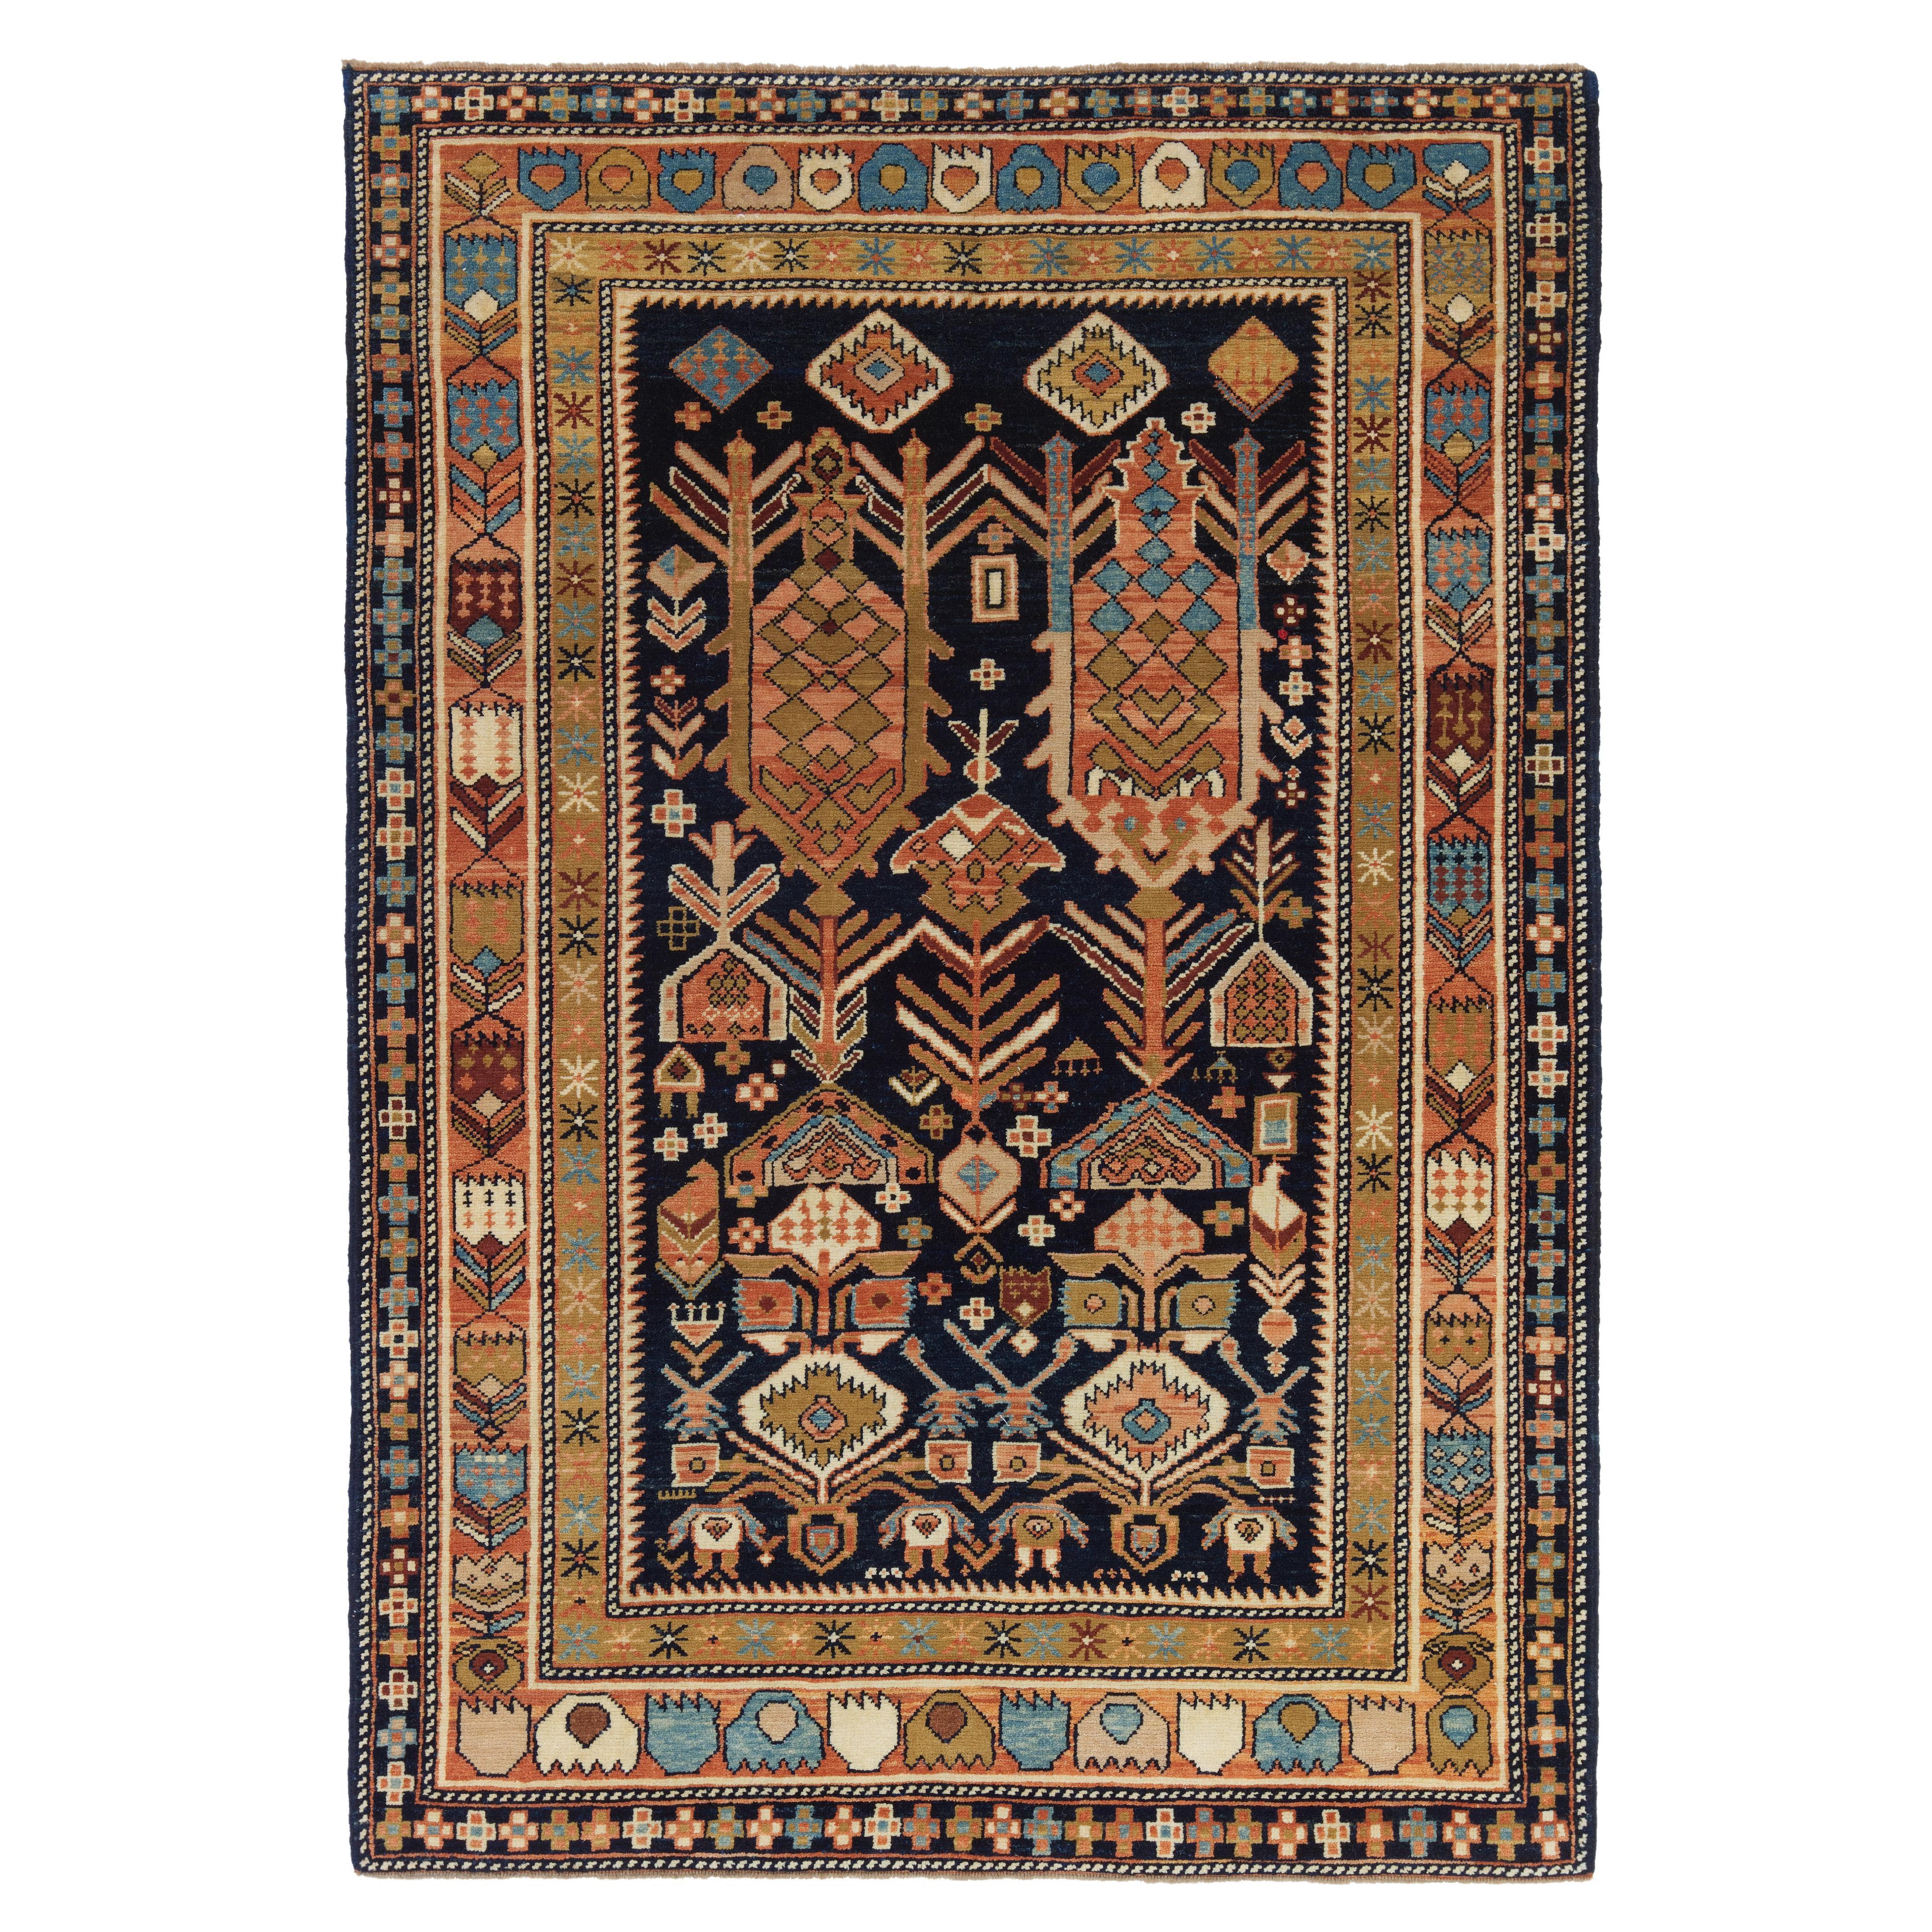 Ararat Rugs Shirvan Rug, 19th C. Antique Caucasian Revival Carpet Natural Dyed